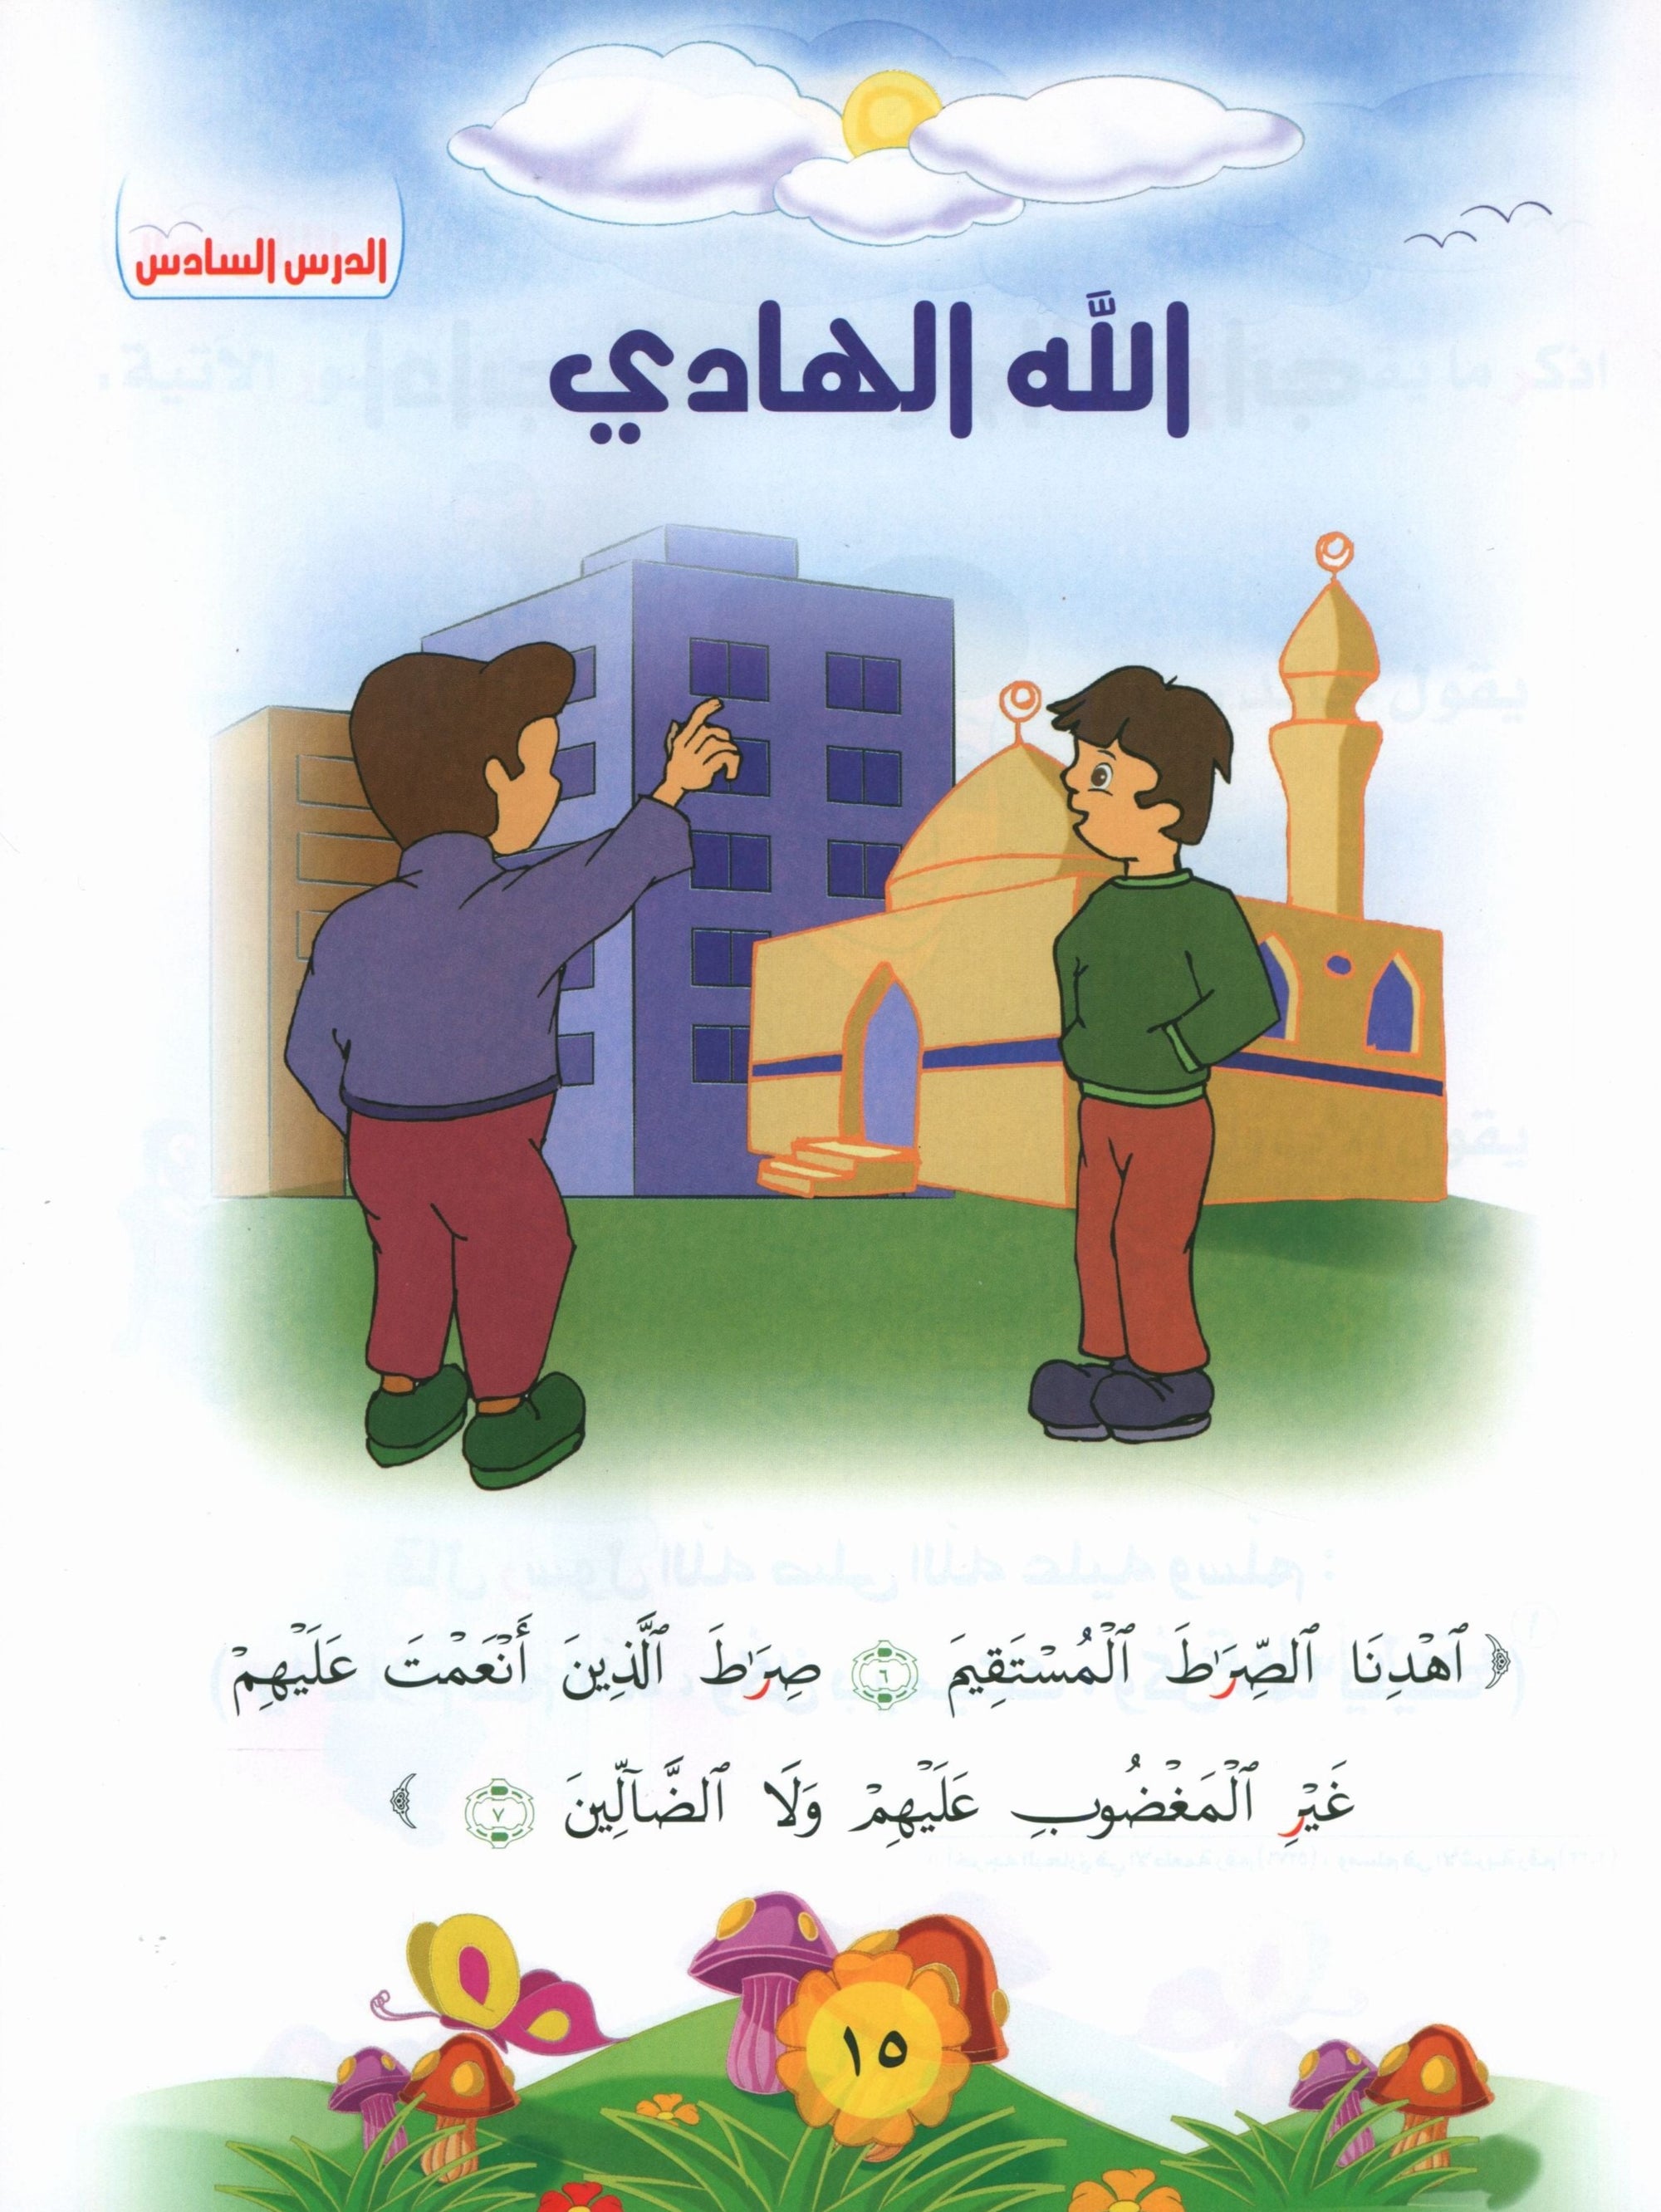 Quranic Kids Club - The Quran Beloved Level 2 Part 1 نادي الطفل القرآني - أحباب القران